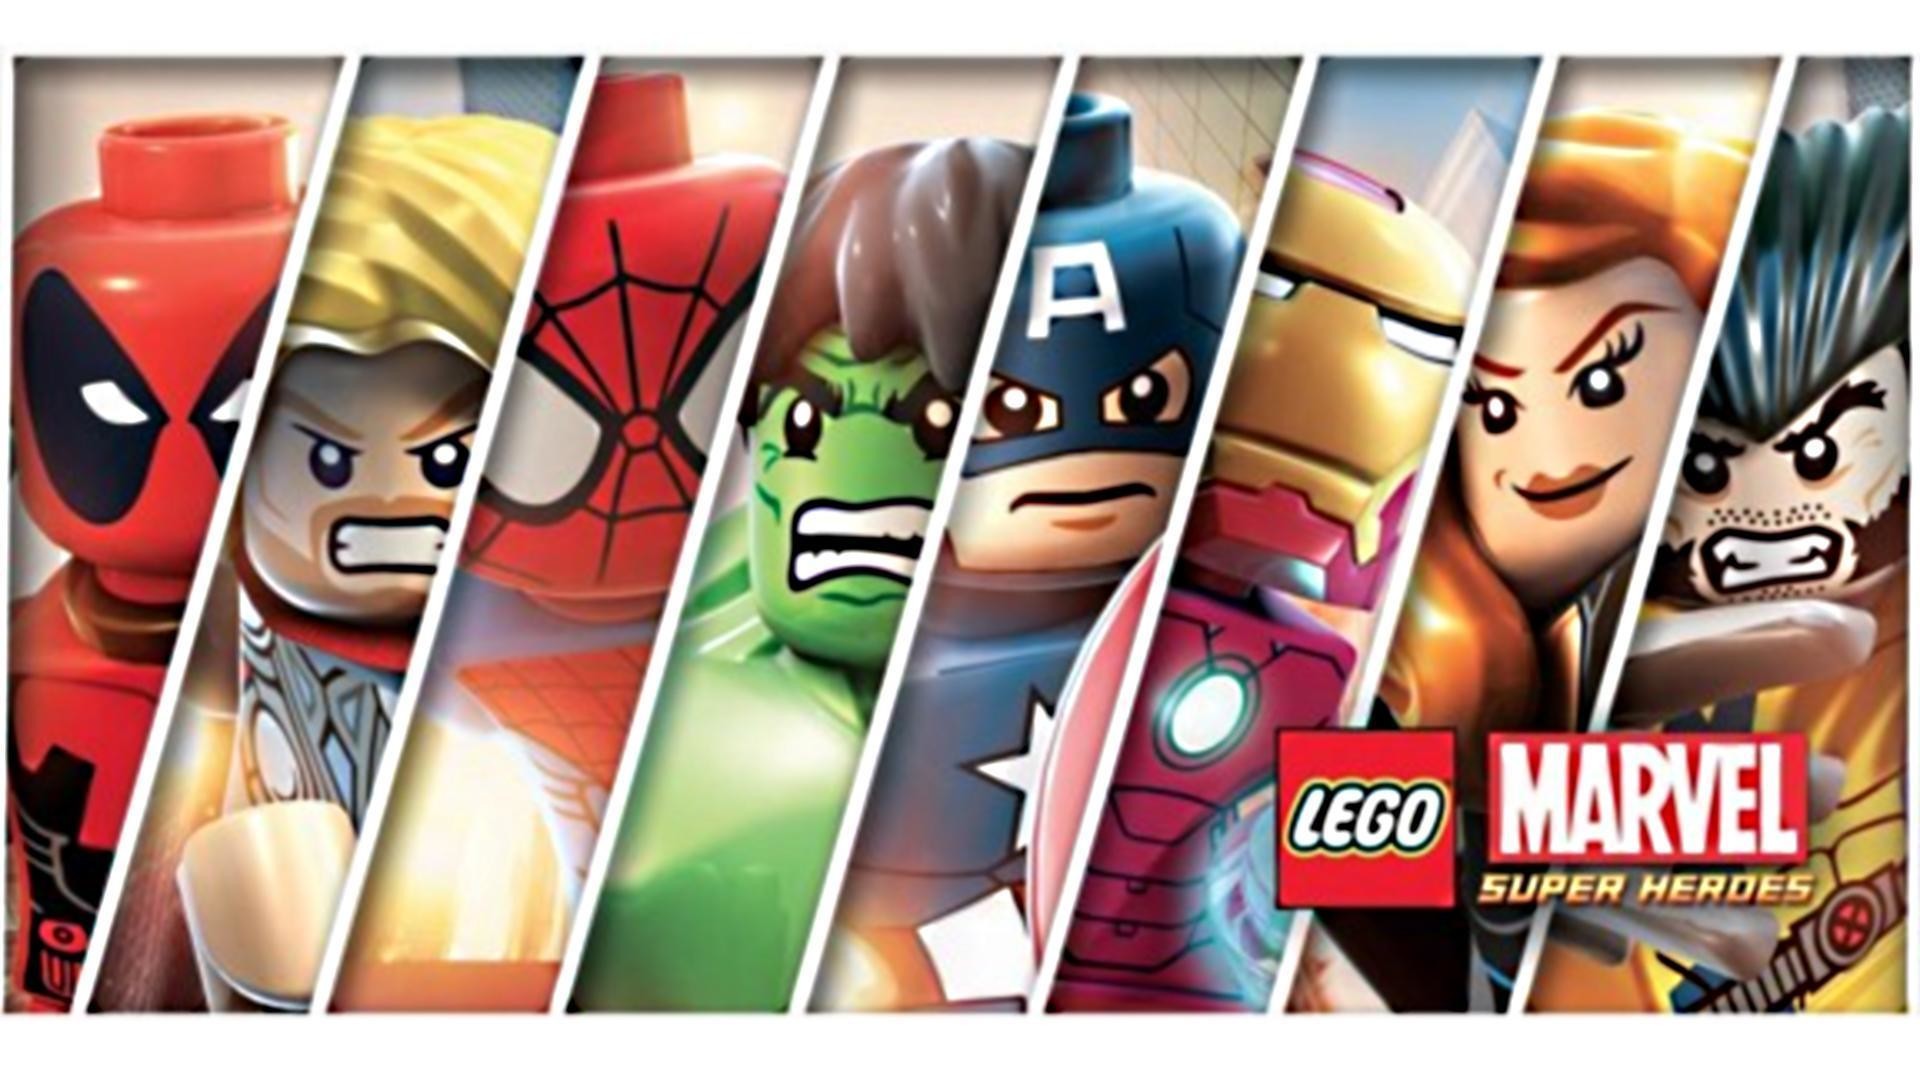 Lego Wallpaper Marvel Super Heroes Lego Superheroes Marvel Iron